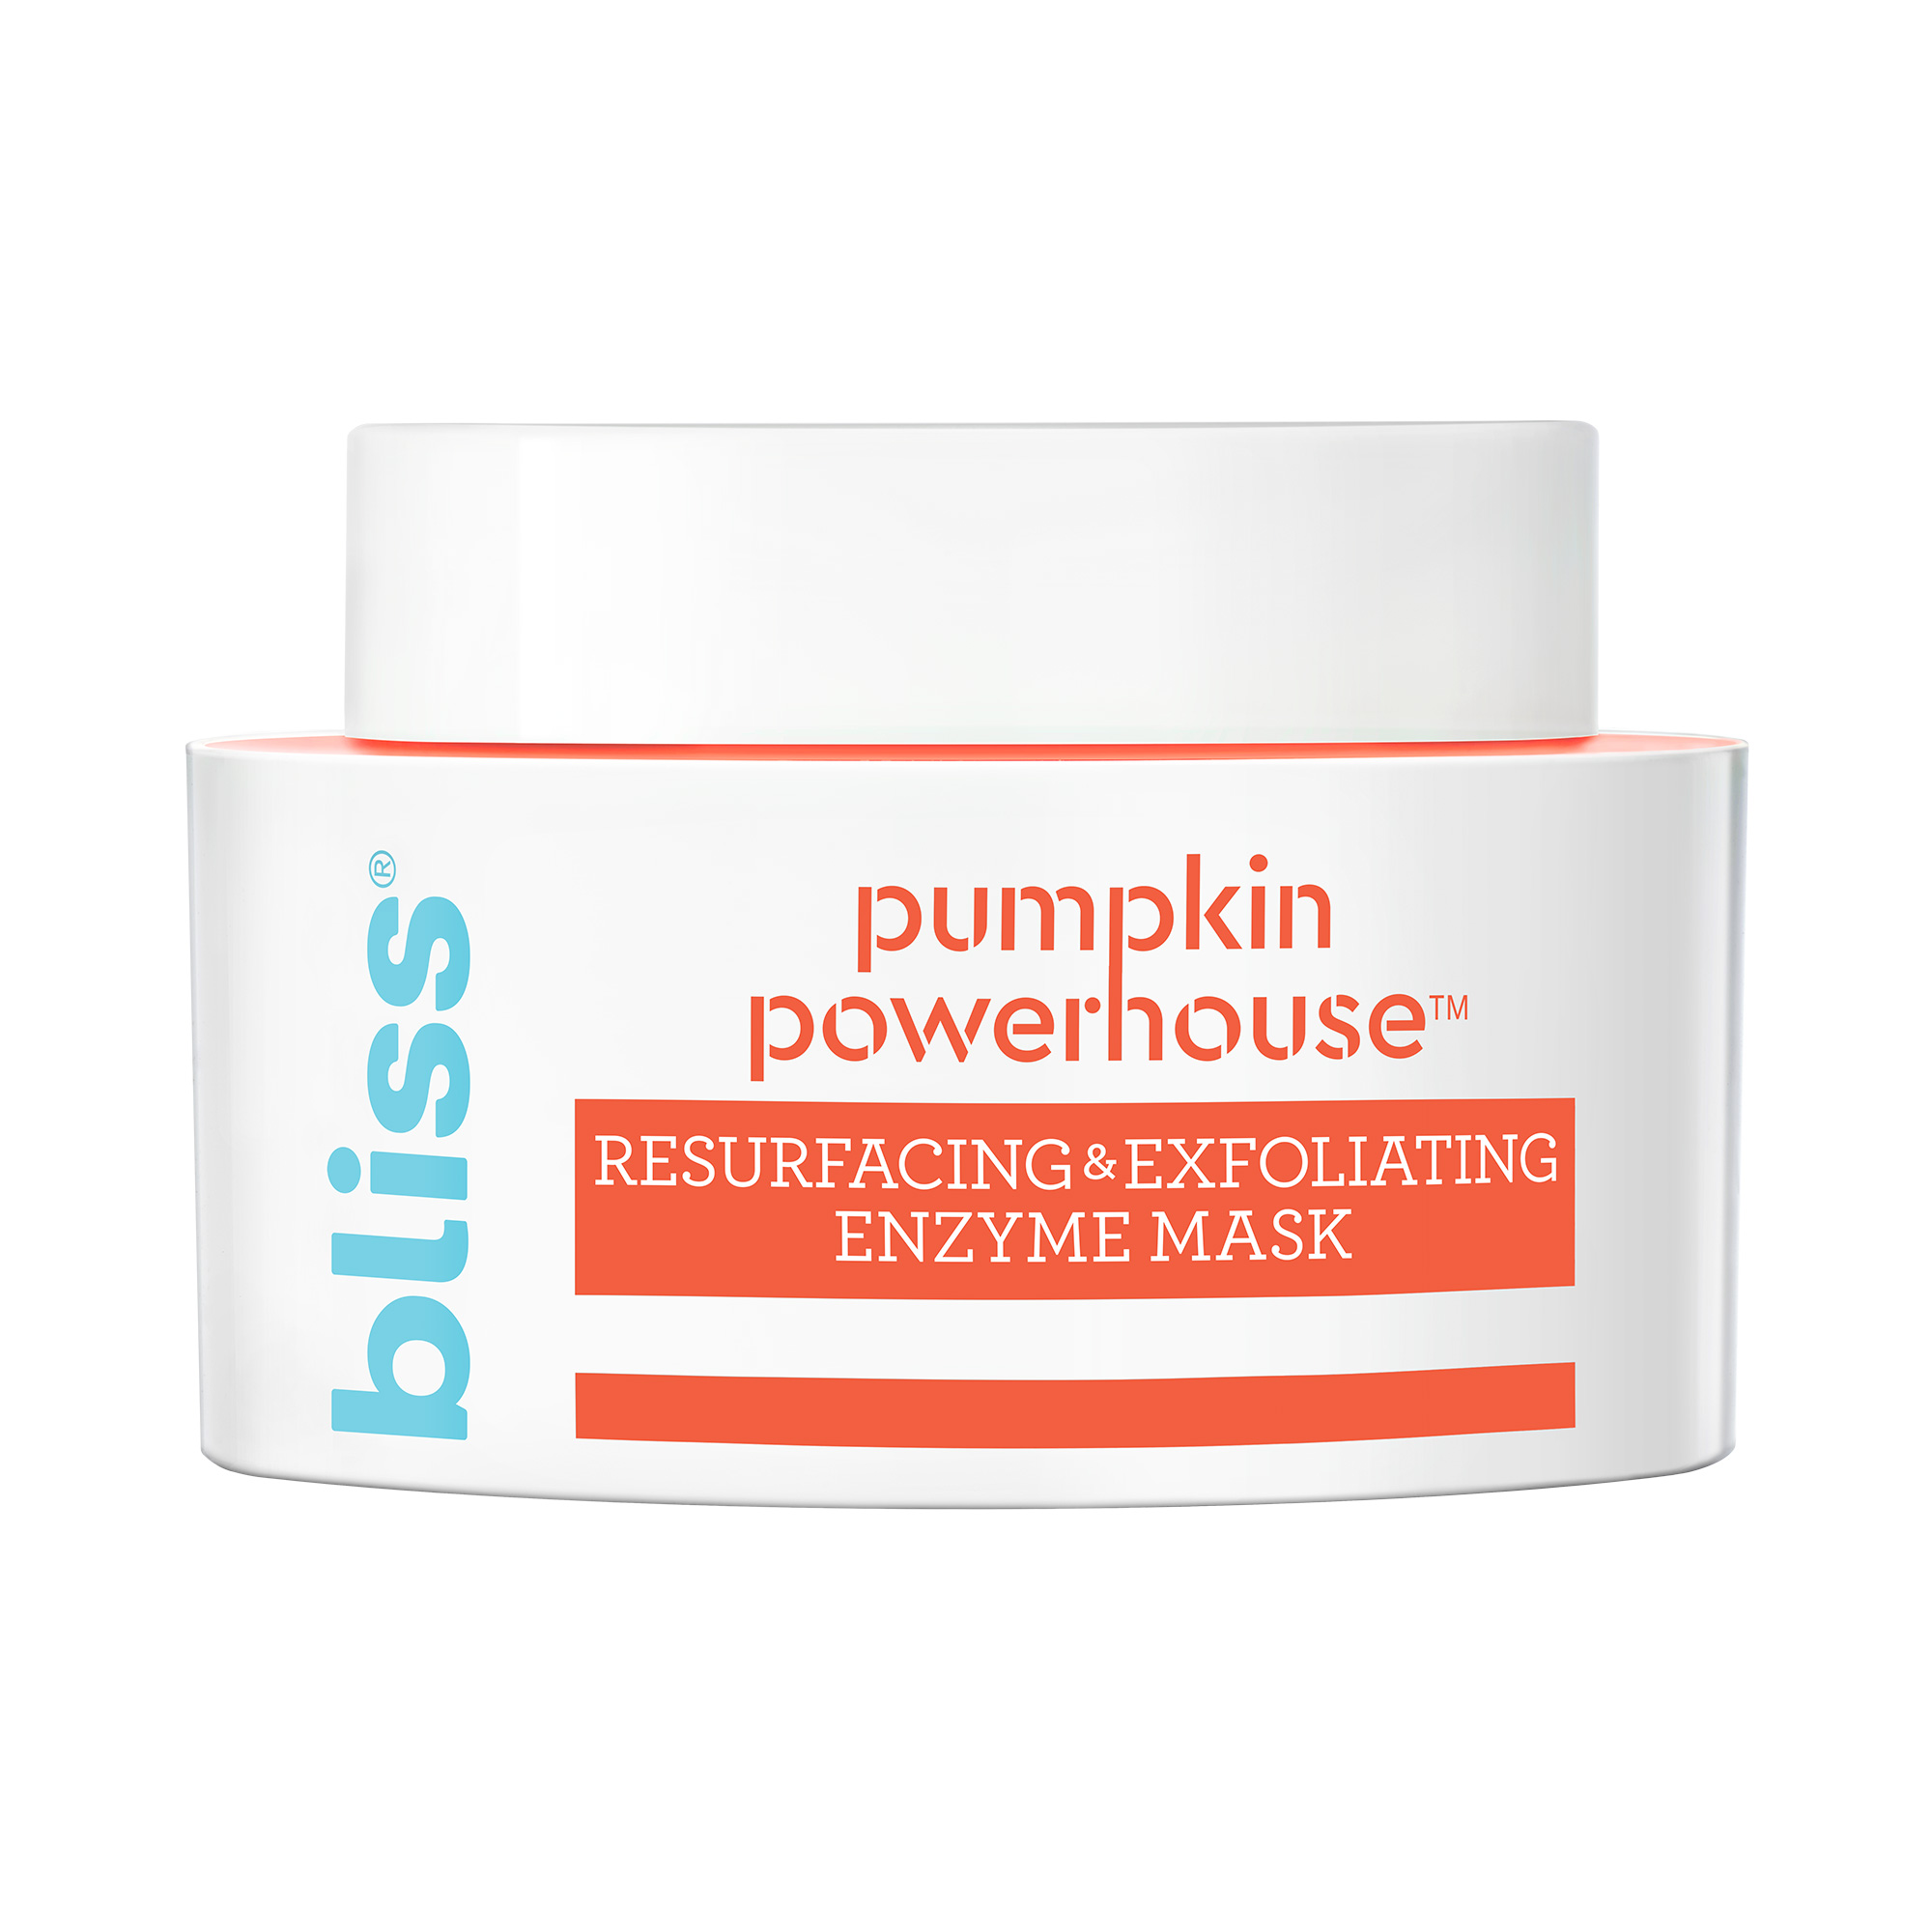 Bliss Powerhouse Pumpkin Face Mask, Resurfacing & Exfoliating Pumpkin Enzyme Mask, 1.7 fl oz - image 1 of 8